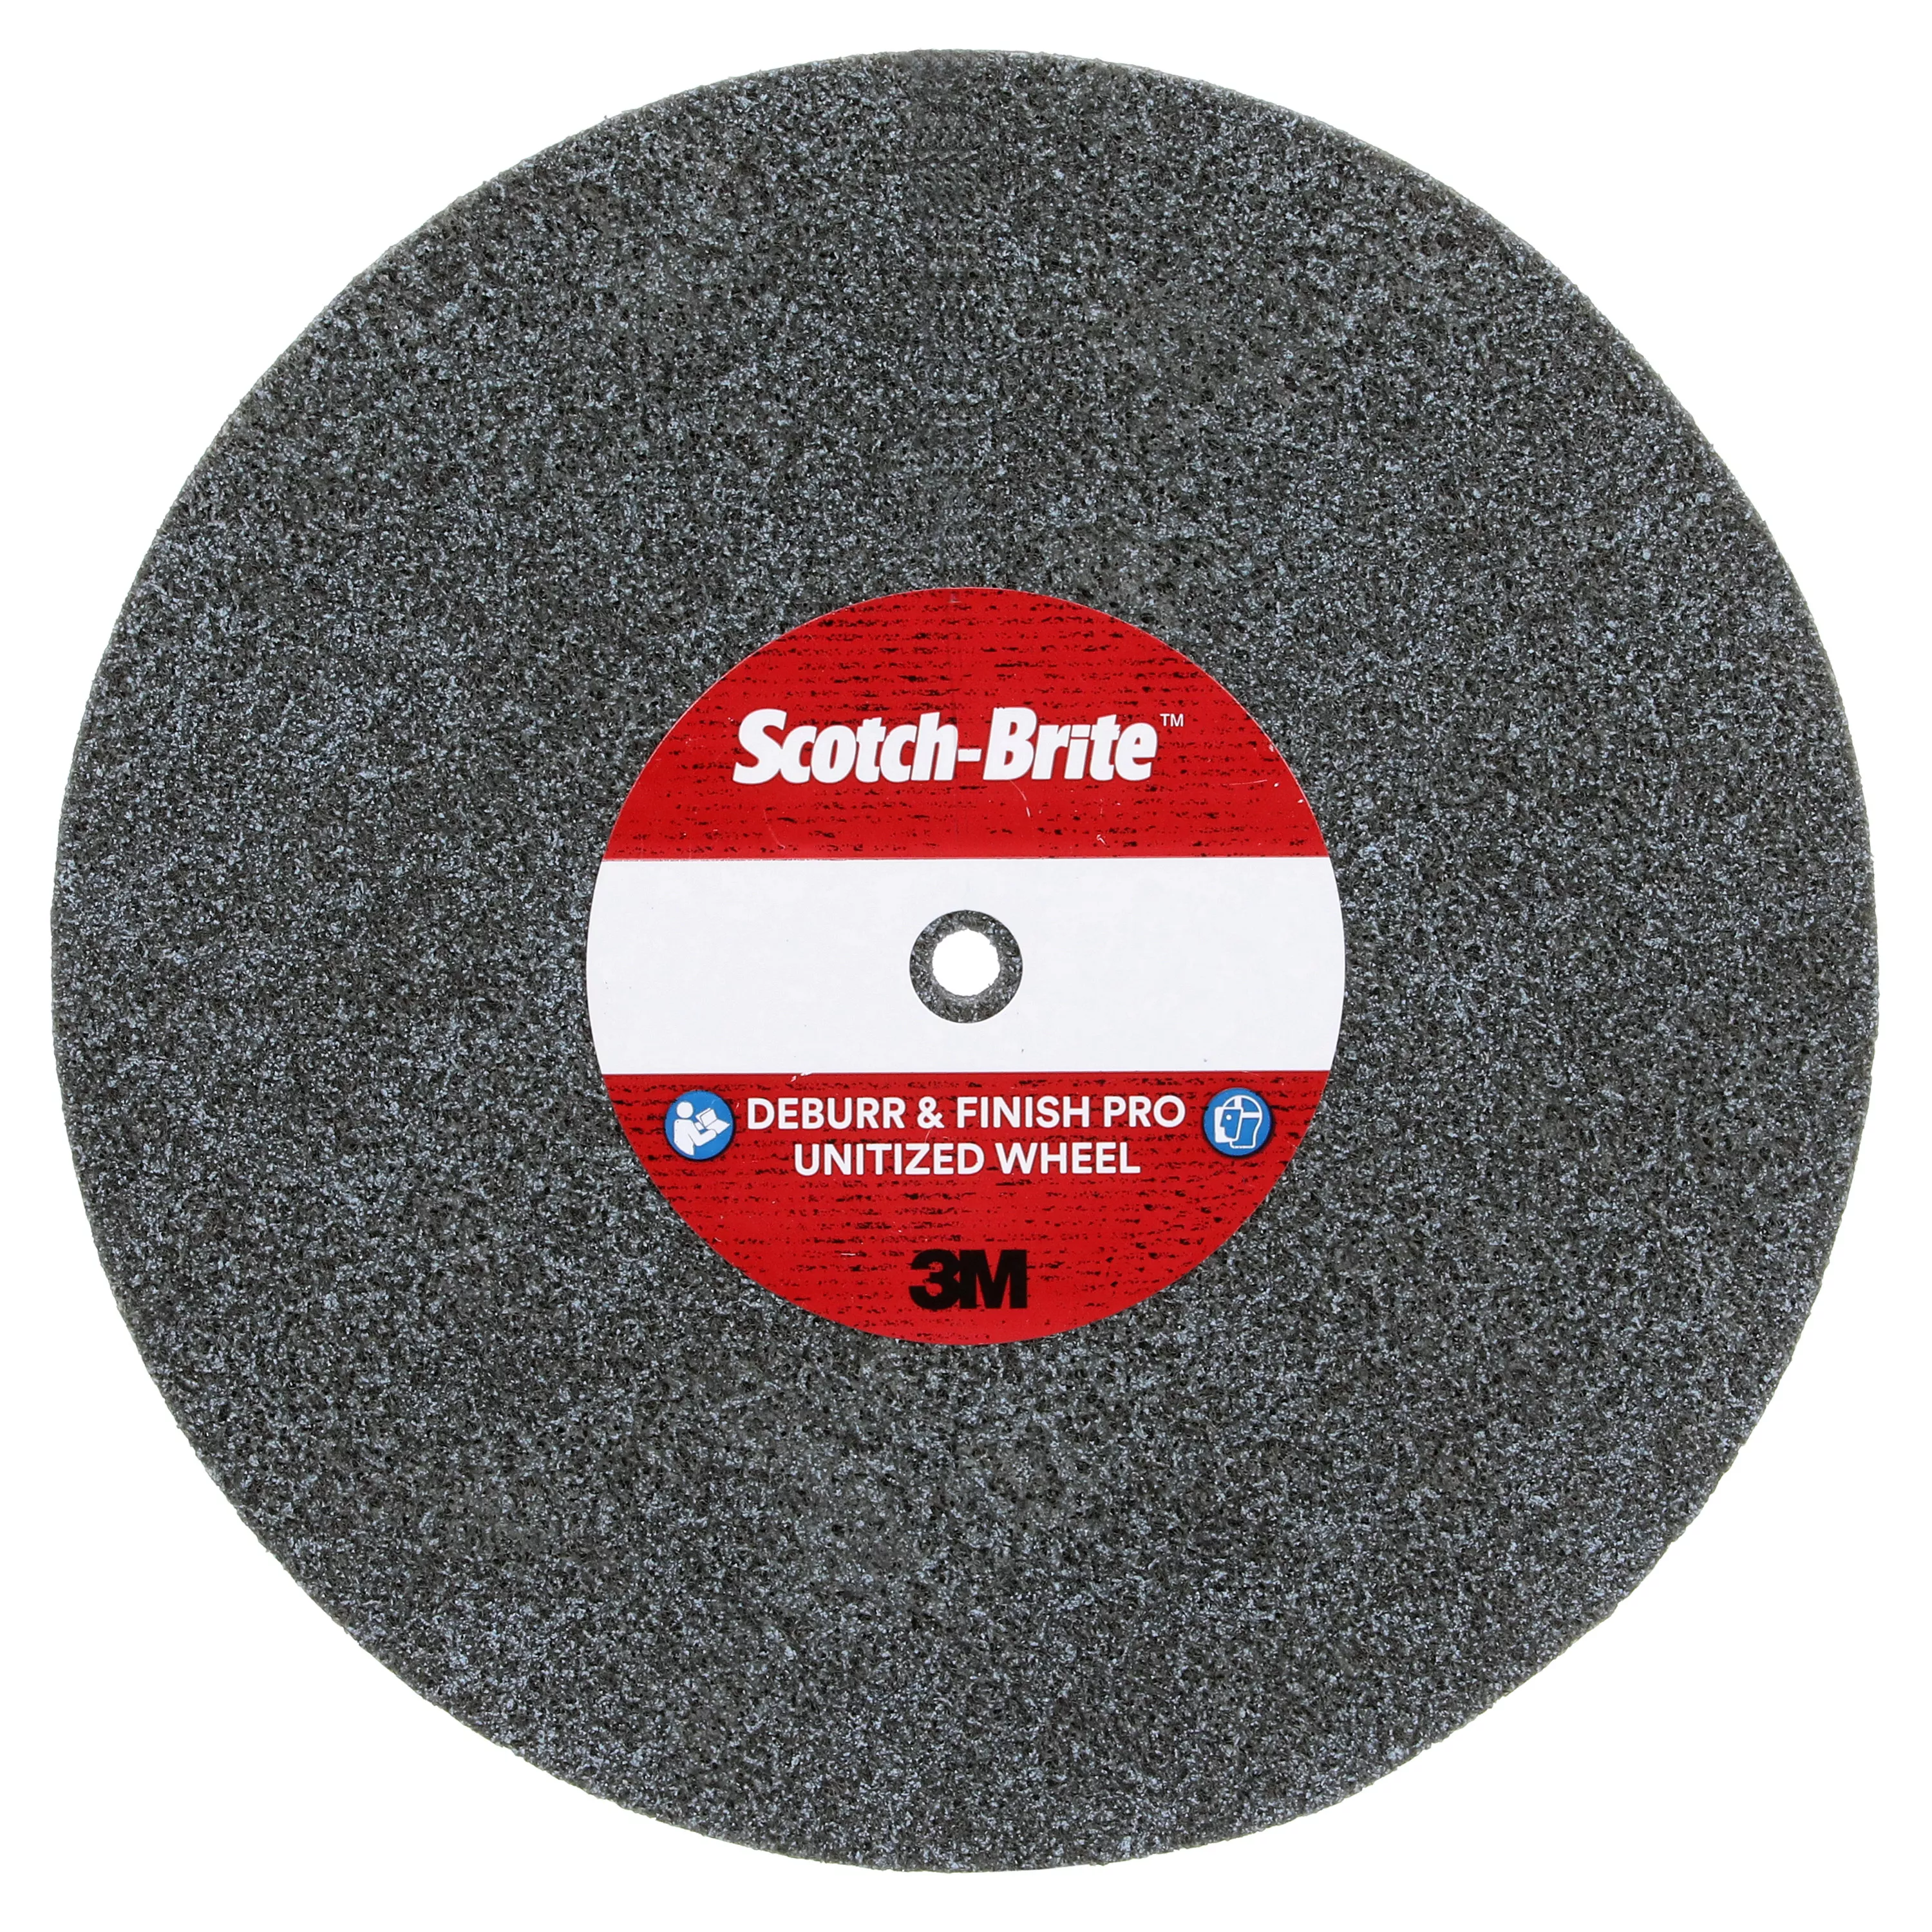 SKU 7100088615 | Scotch-Brite™ Deburr & Finish Pro Unitized Wheel